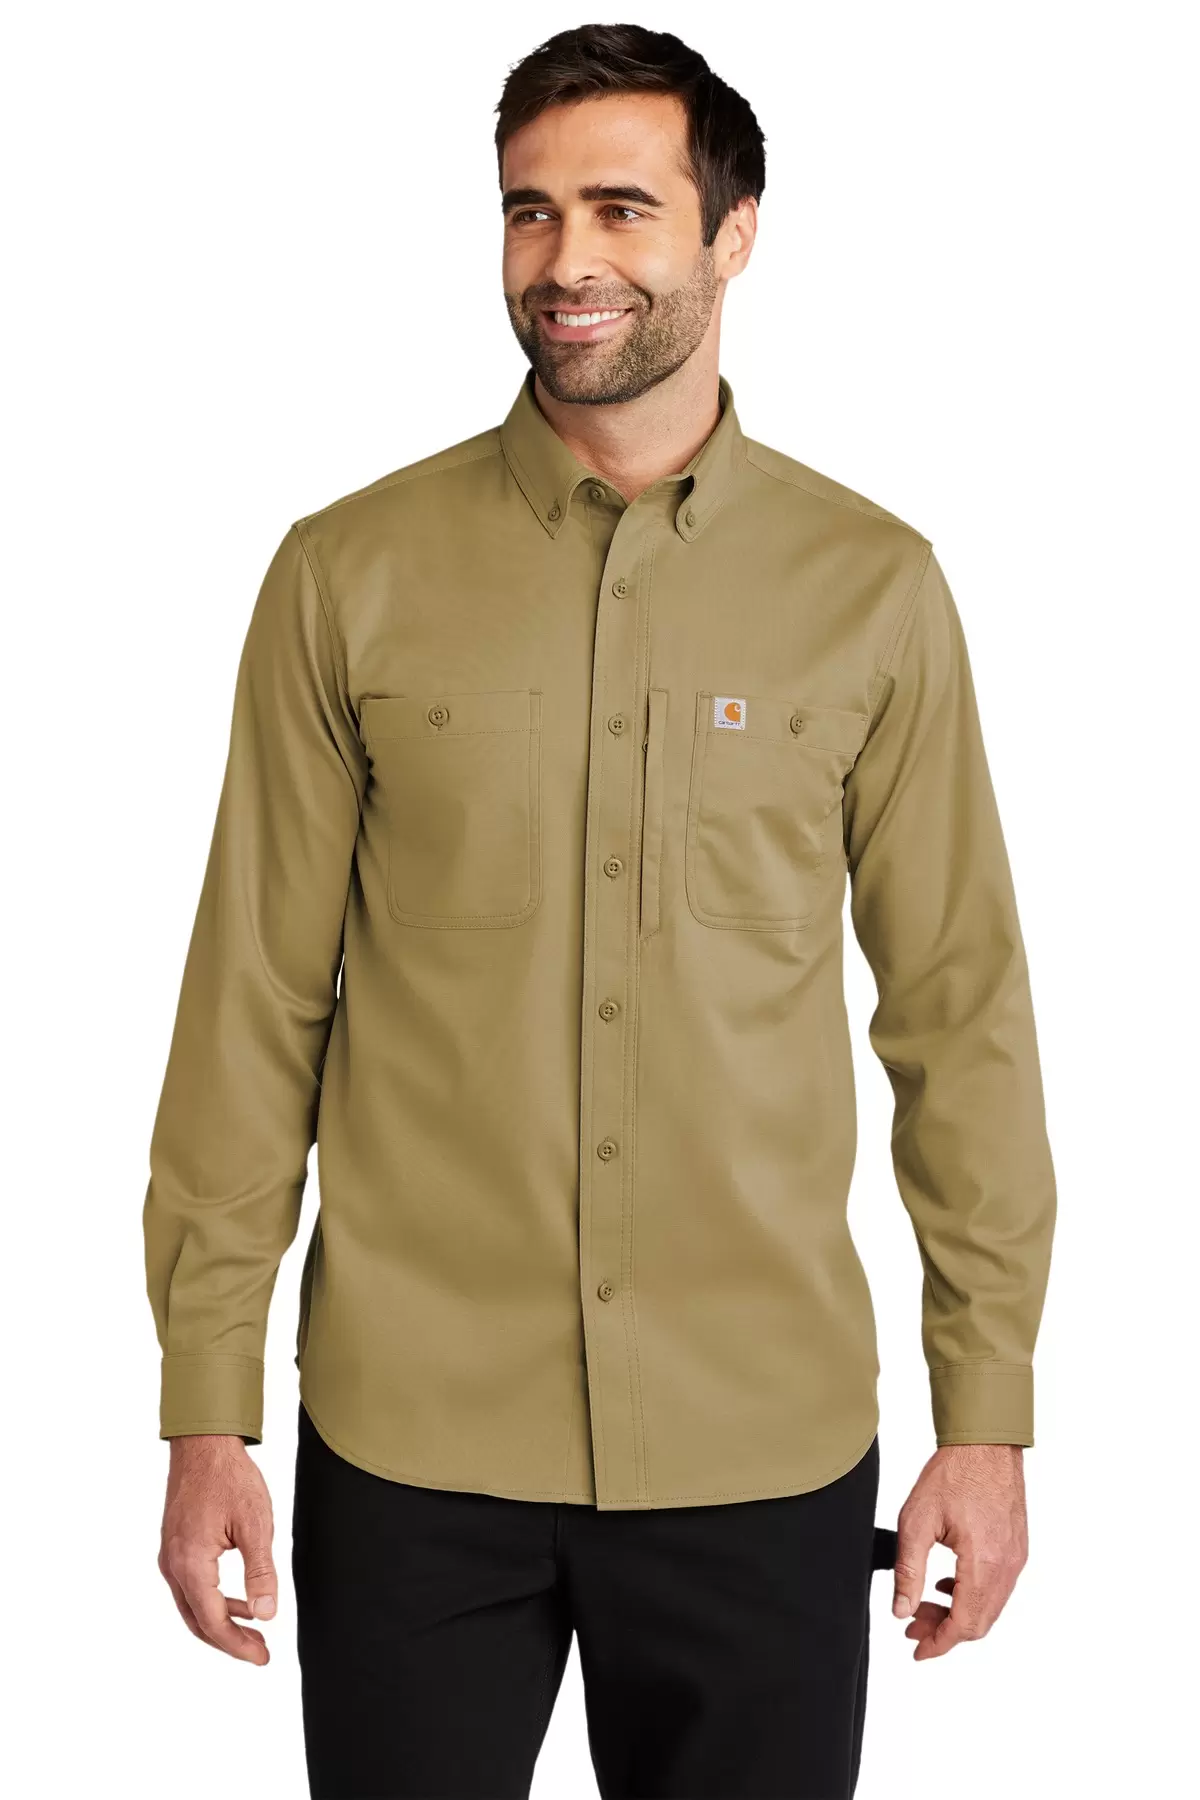 CARHARTT 102538 Carhartt Rugged Professional Series Long Sleeve Shirt